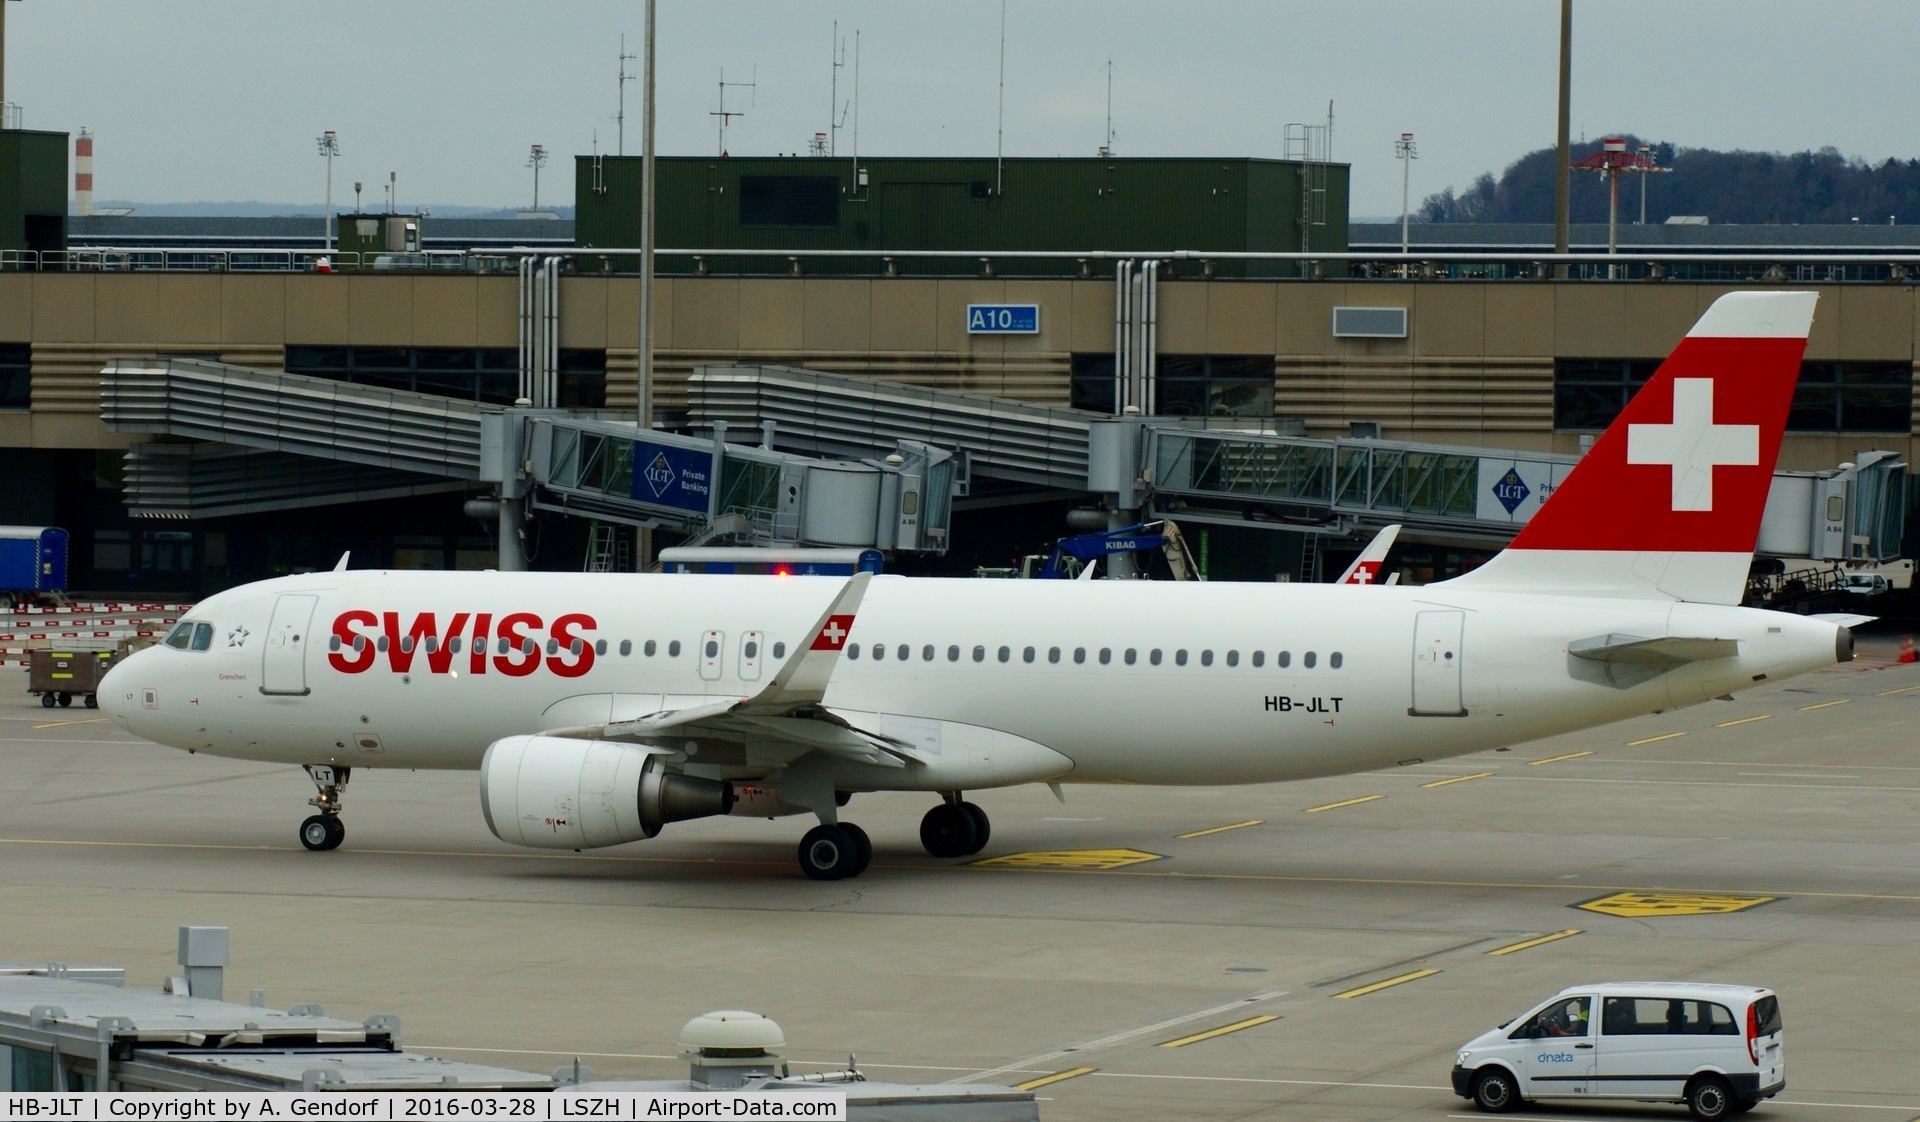 HB-JLT, 2013 Airbus A320-214 C/N 5518, Swiss, is here taxiing at Zürich-Kloten(LSZH)